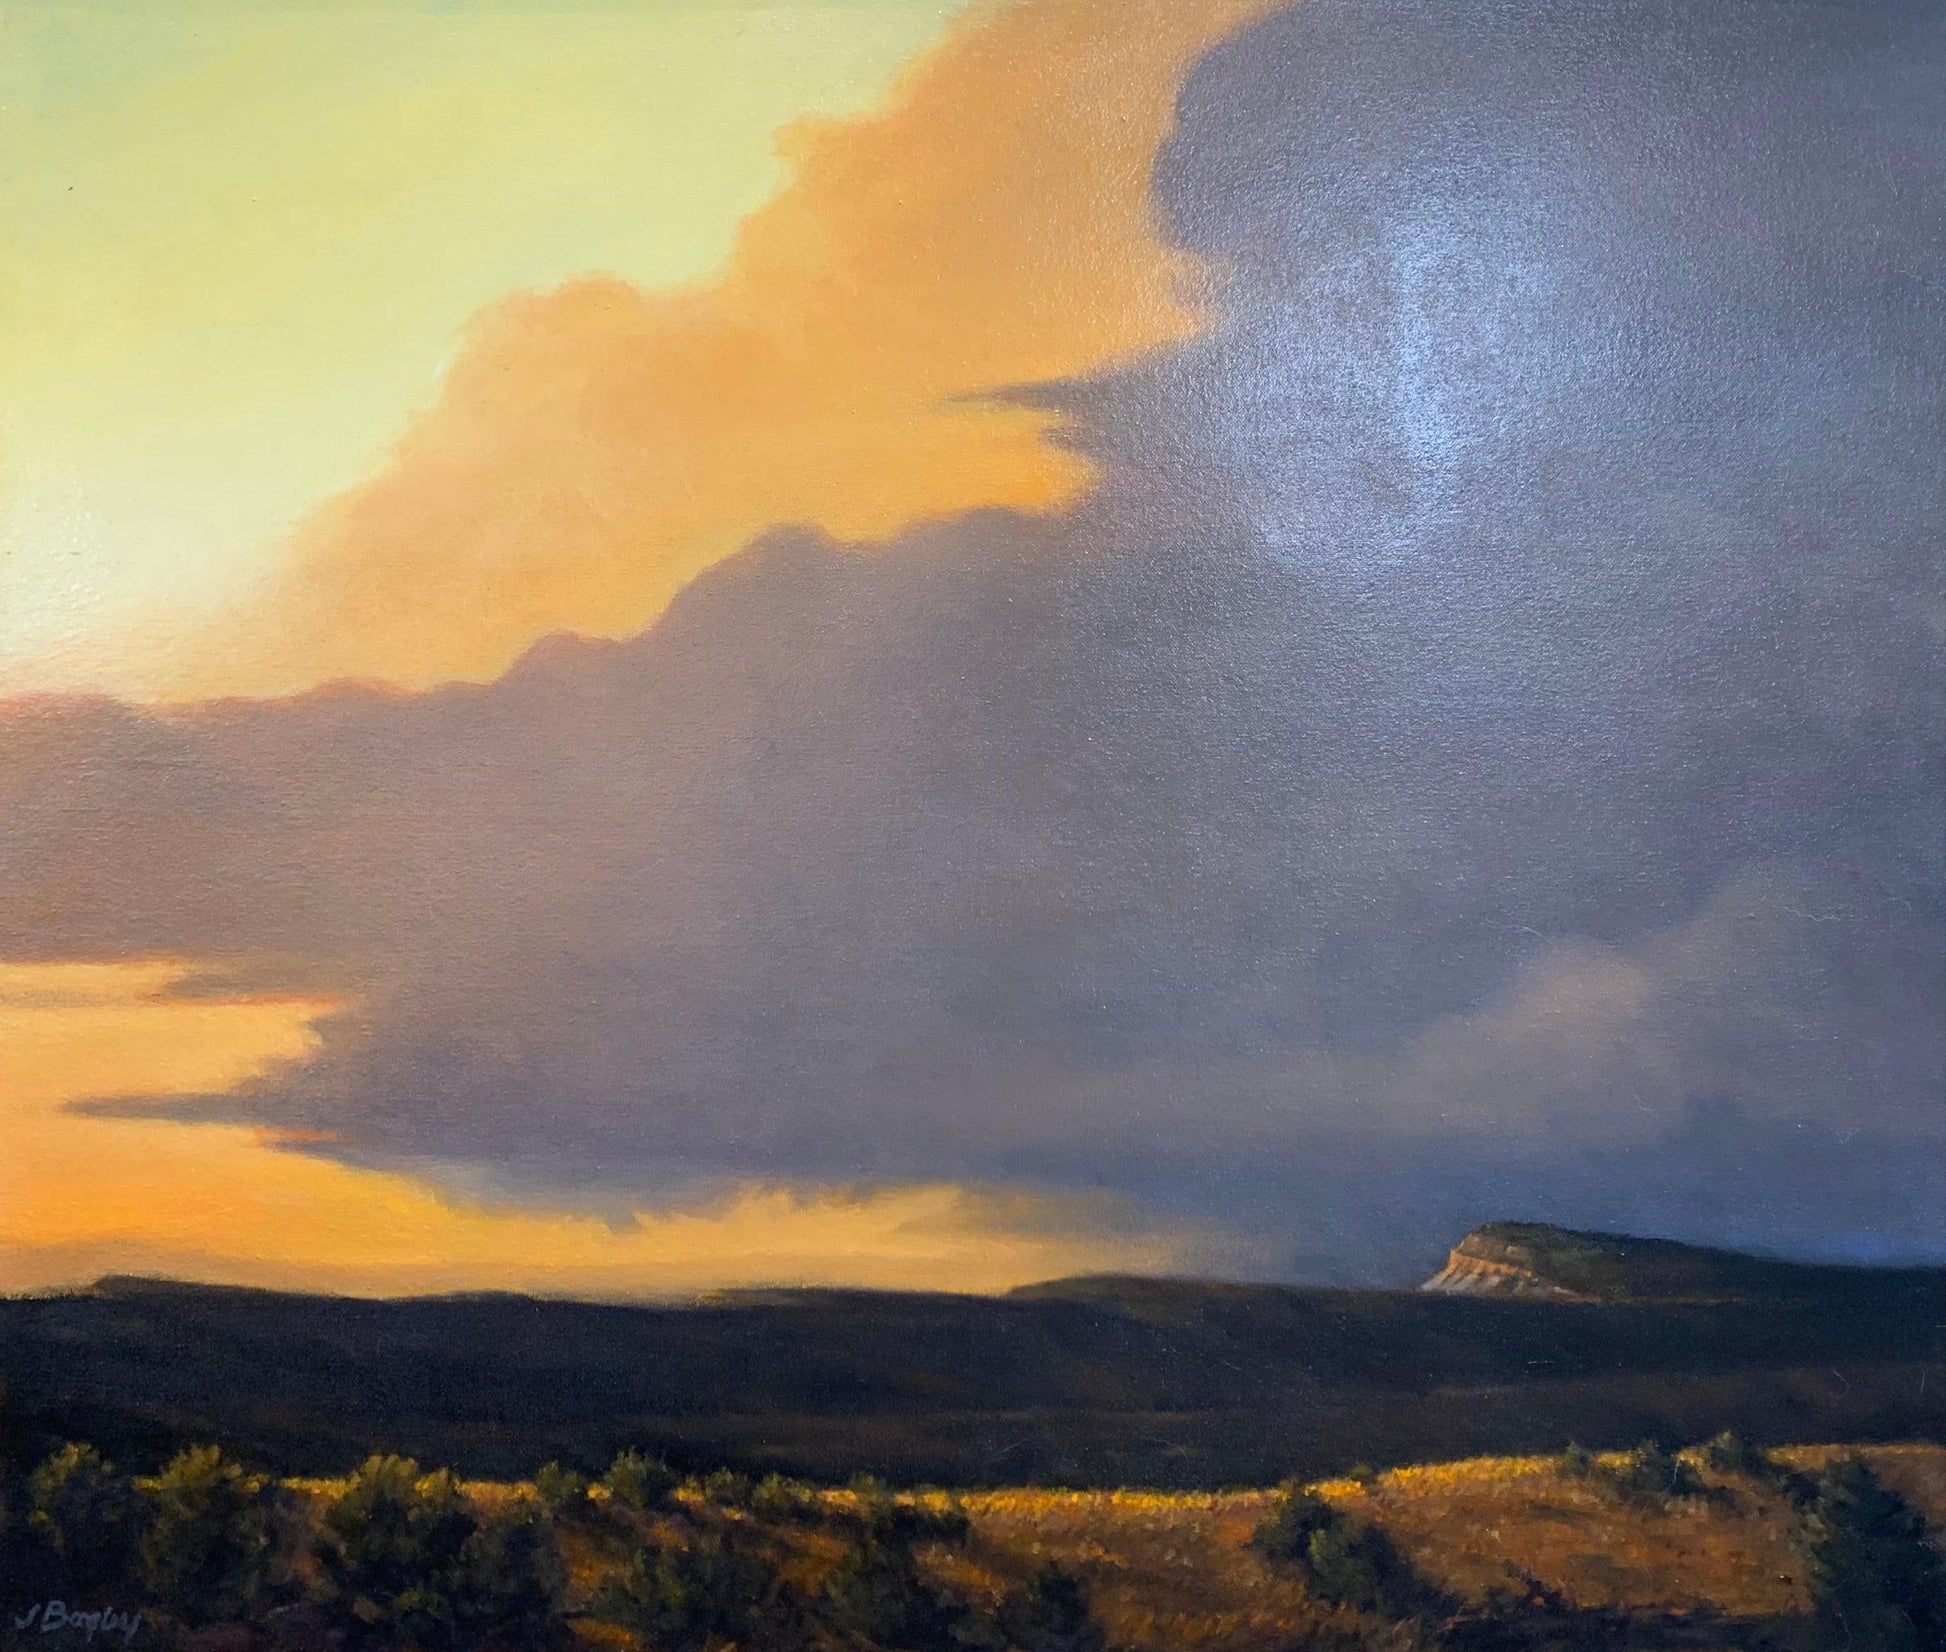 Little West on Durango-painting-Jim Bagley-Sorrel Sky Gallery